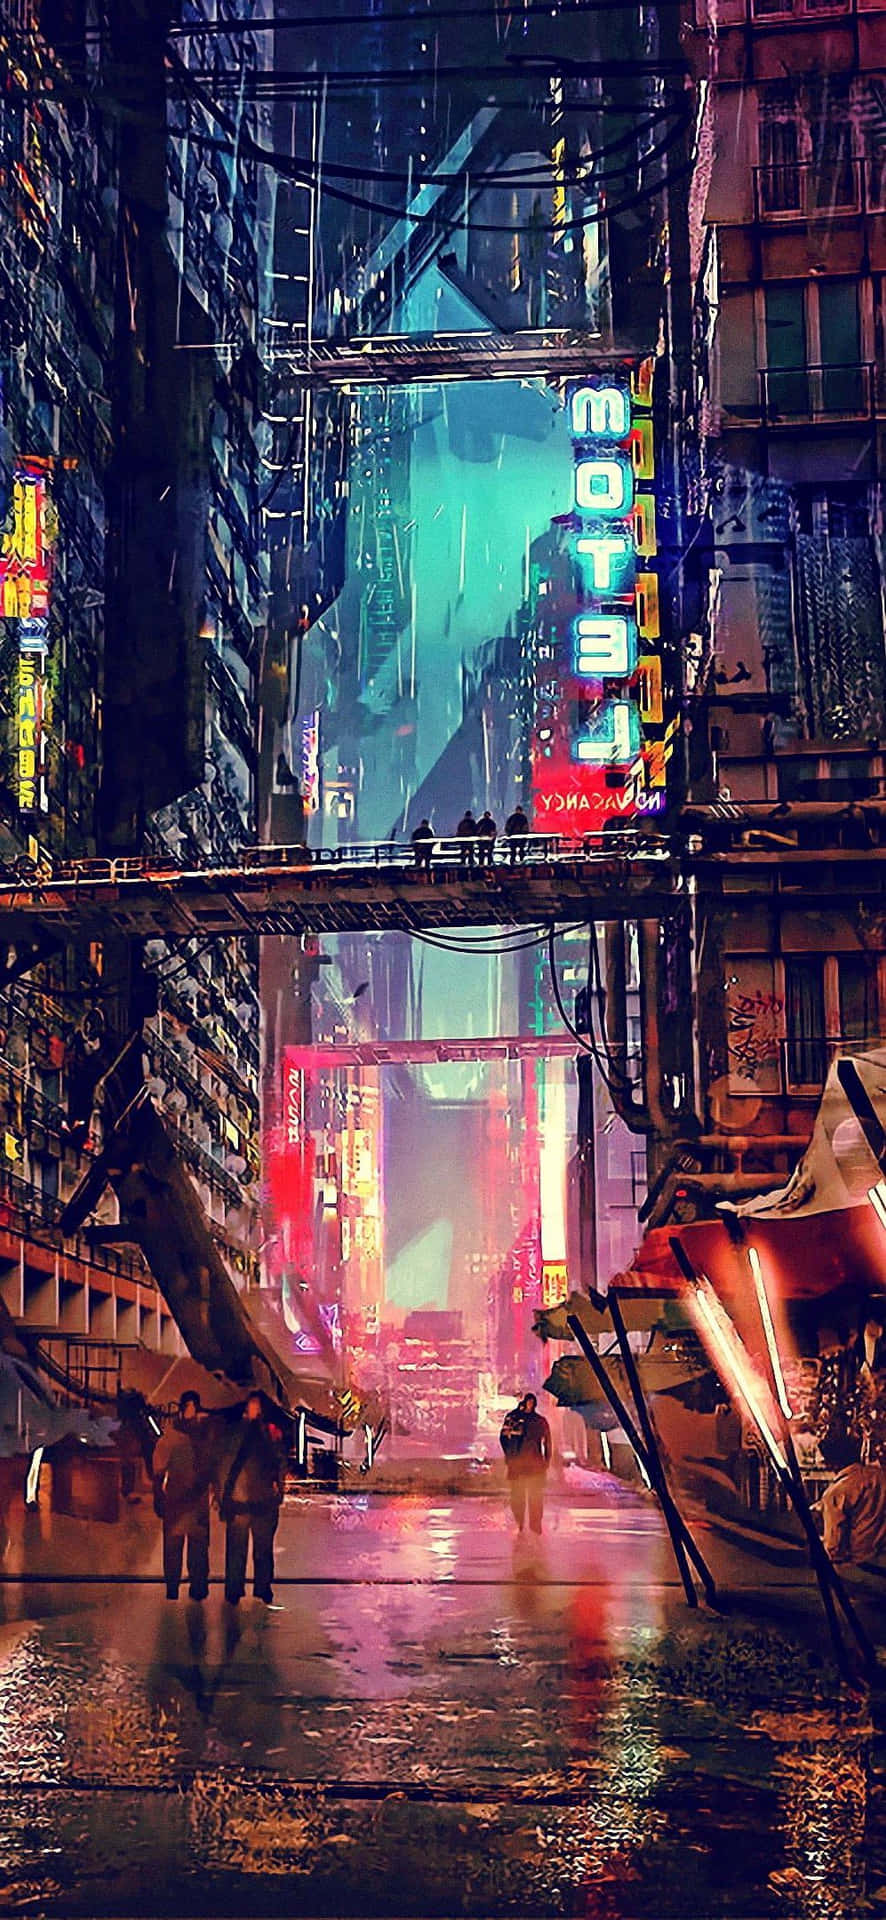 Prepare for Immersive Futuristic World with iPhone Xs Max and Cyberpunk 2077